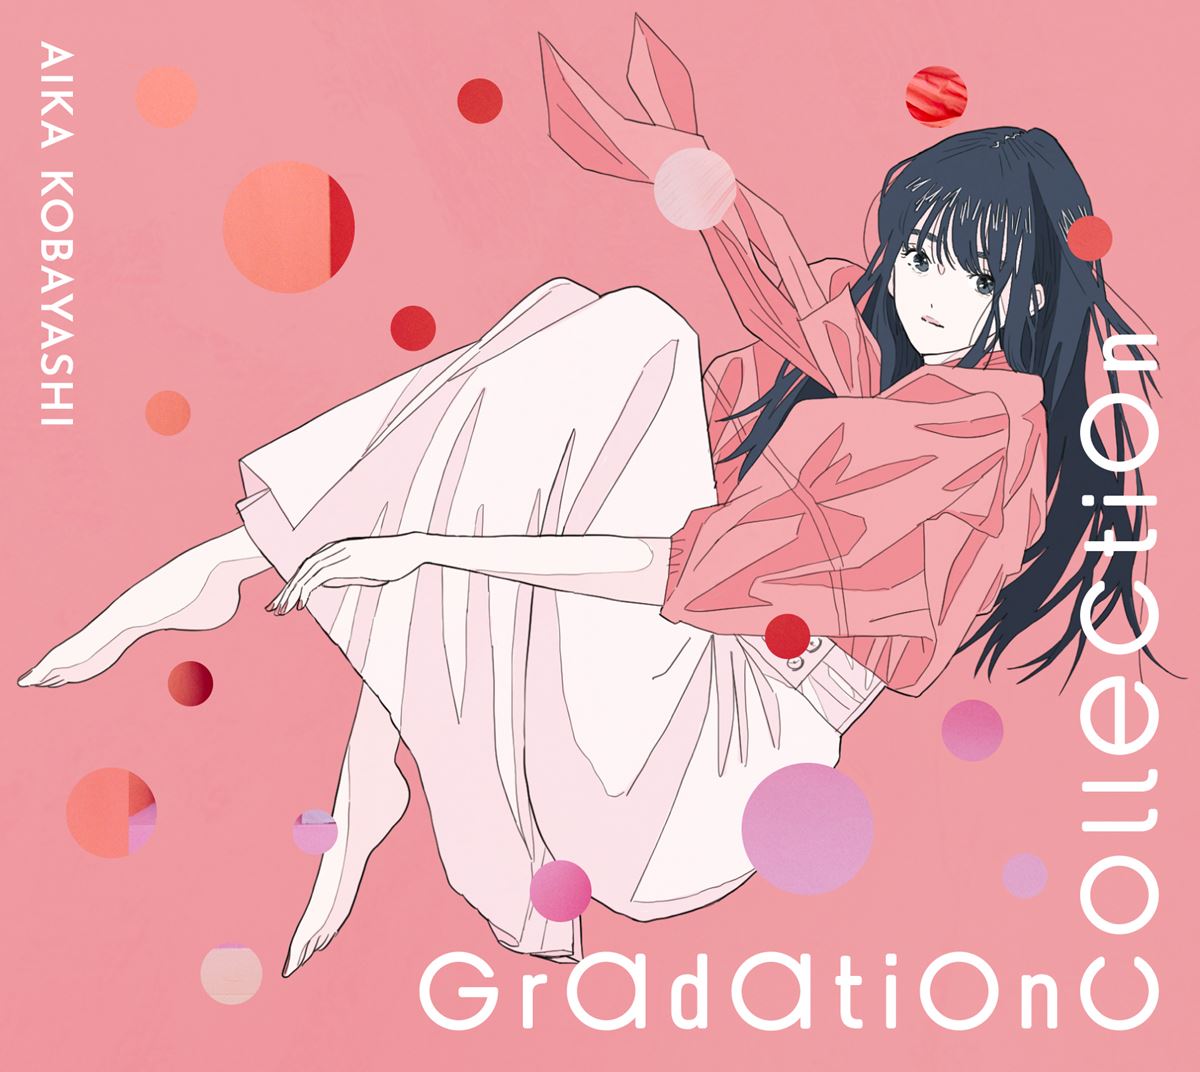 『Gradation Collection』初回生産限定盤